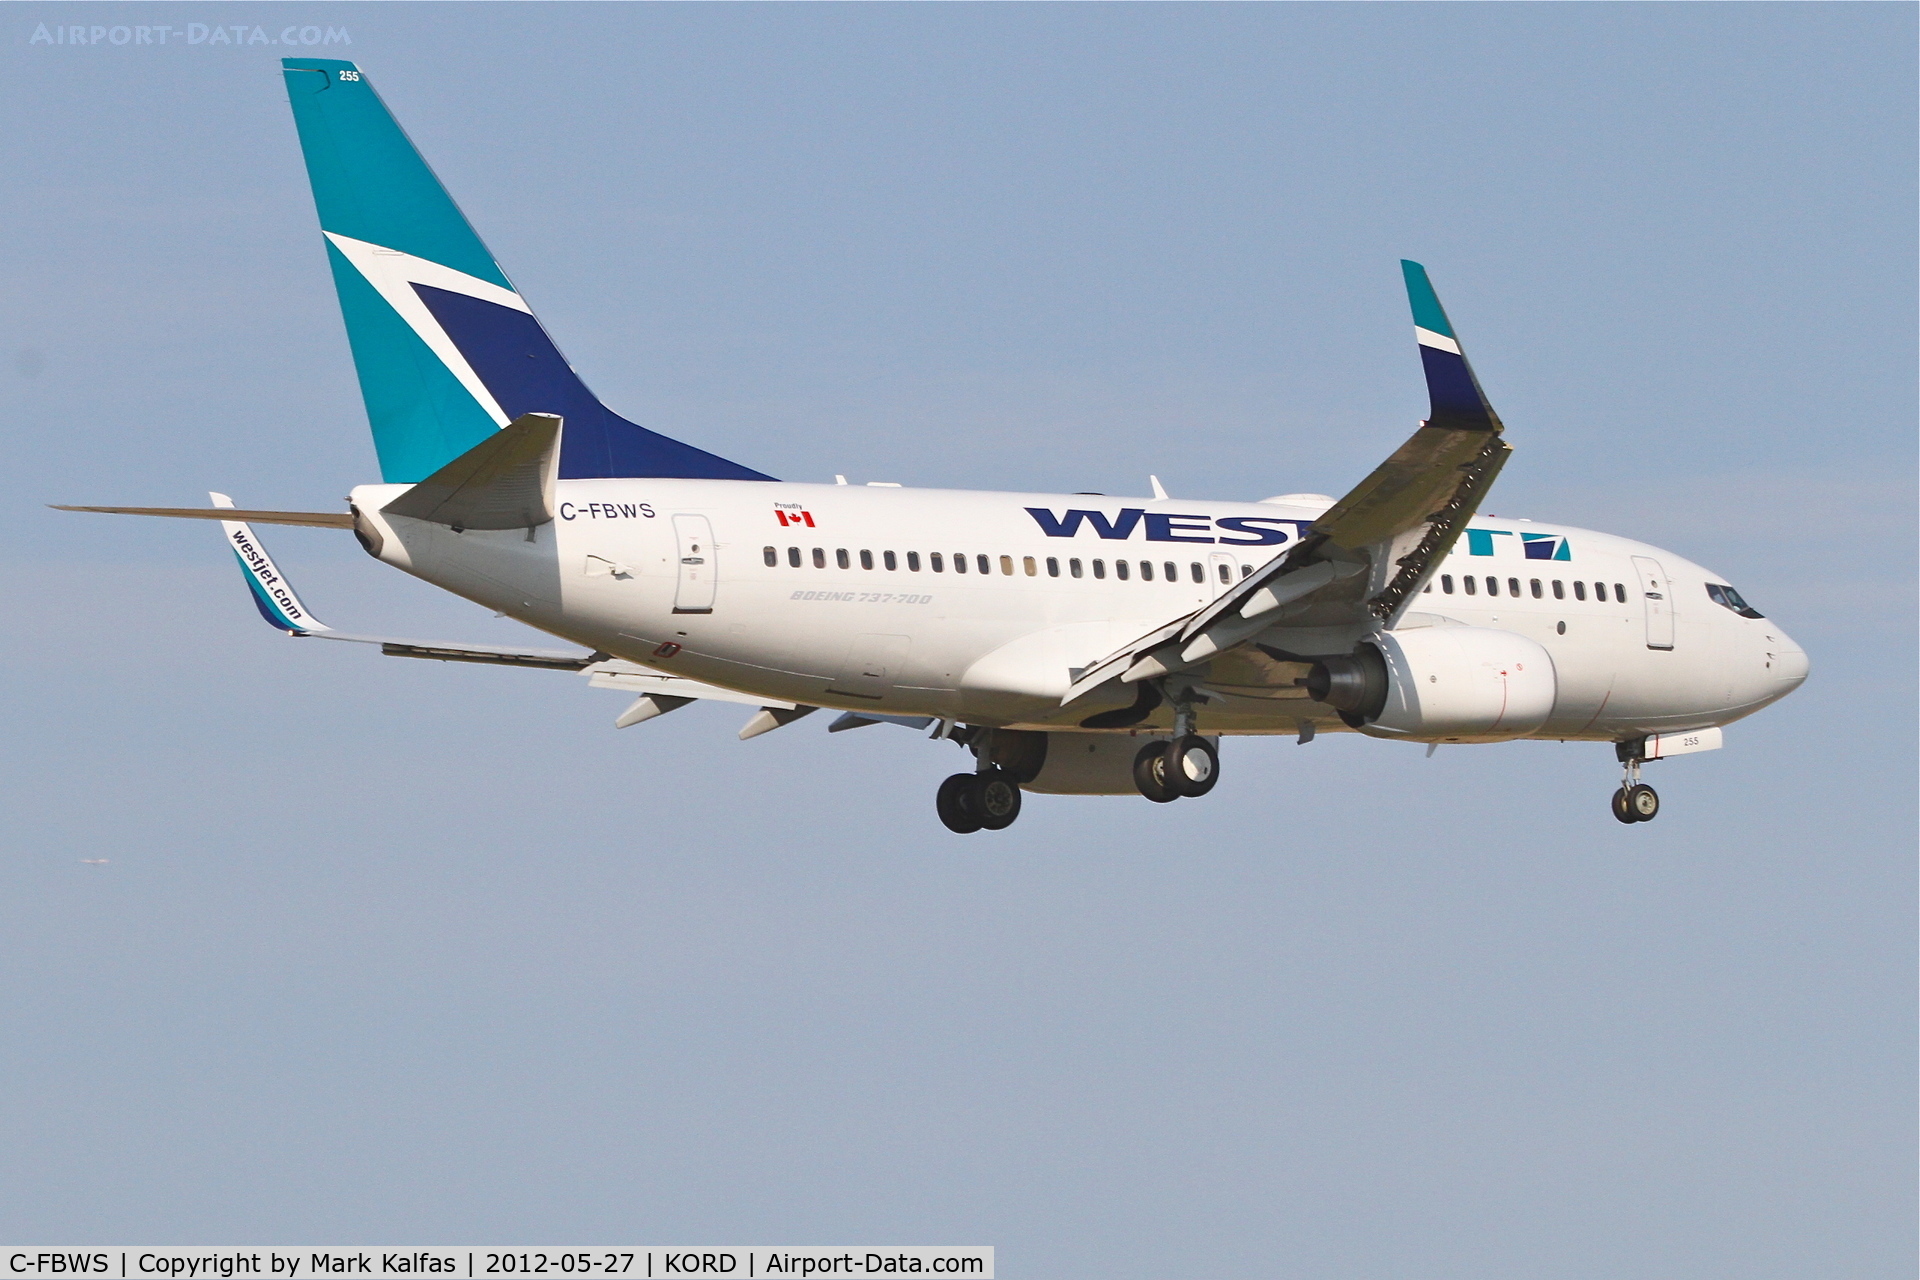 C-FBWS, 2009 Boeing 737-7CT C/N 37008, WestJet Boeing 737-7CT, WJA1688 arriving from Vancouver Int'l/CYVR, RWY 14R approach KORD.